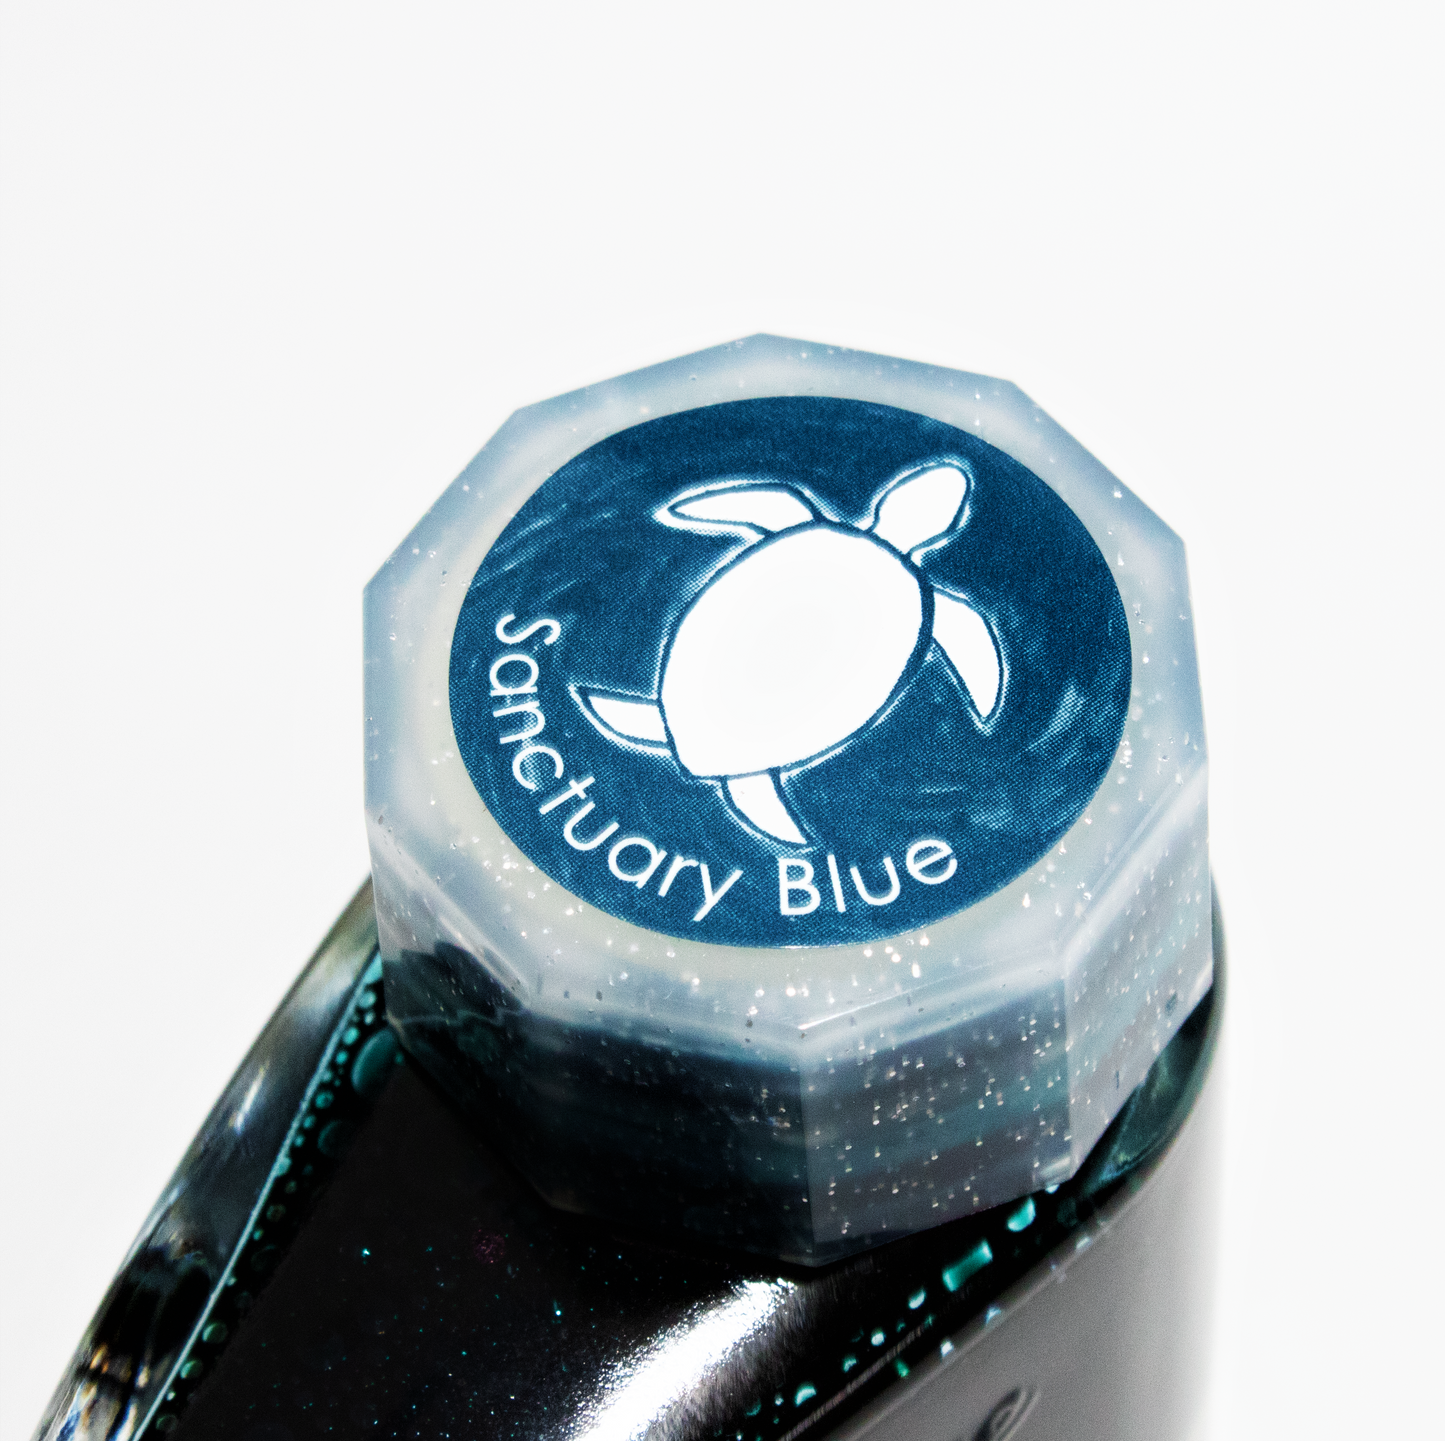 Ink tells more "Sanctuary Blue"